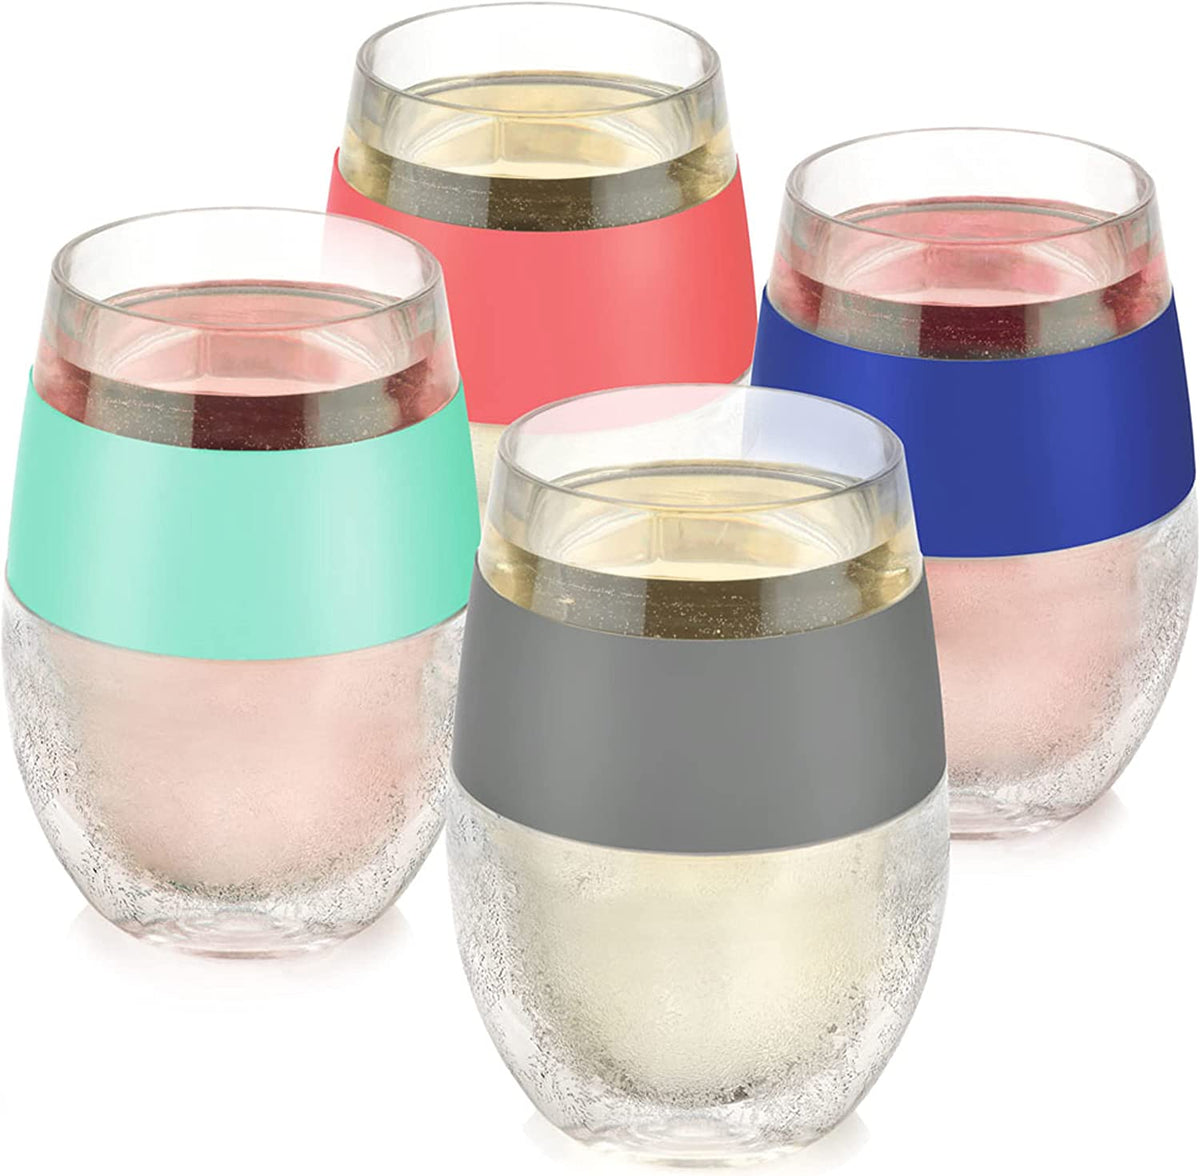 Host - Freeze Wine Cooling Cup - Translucent Magenta